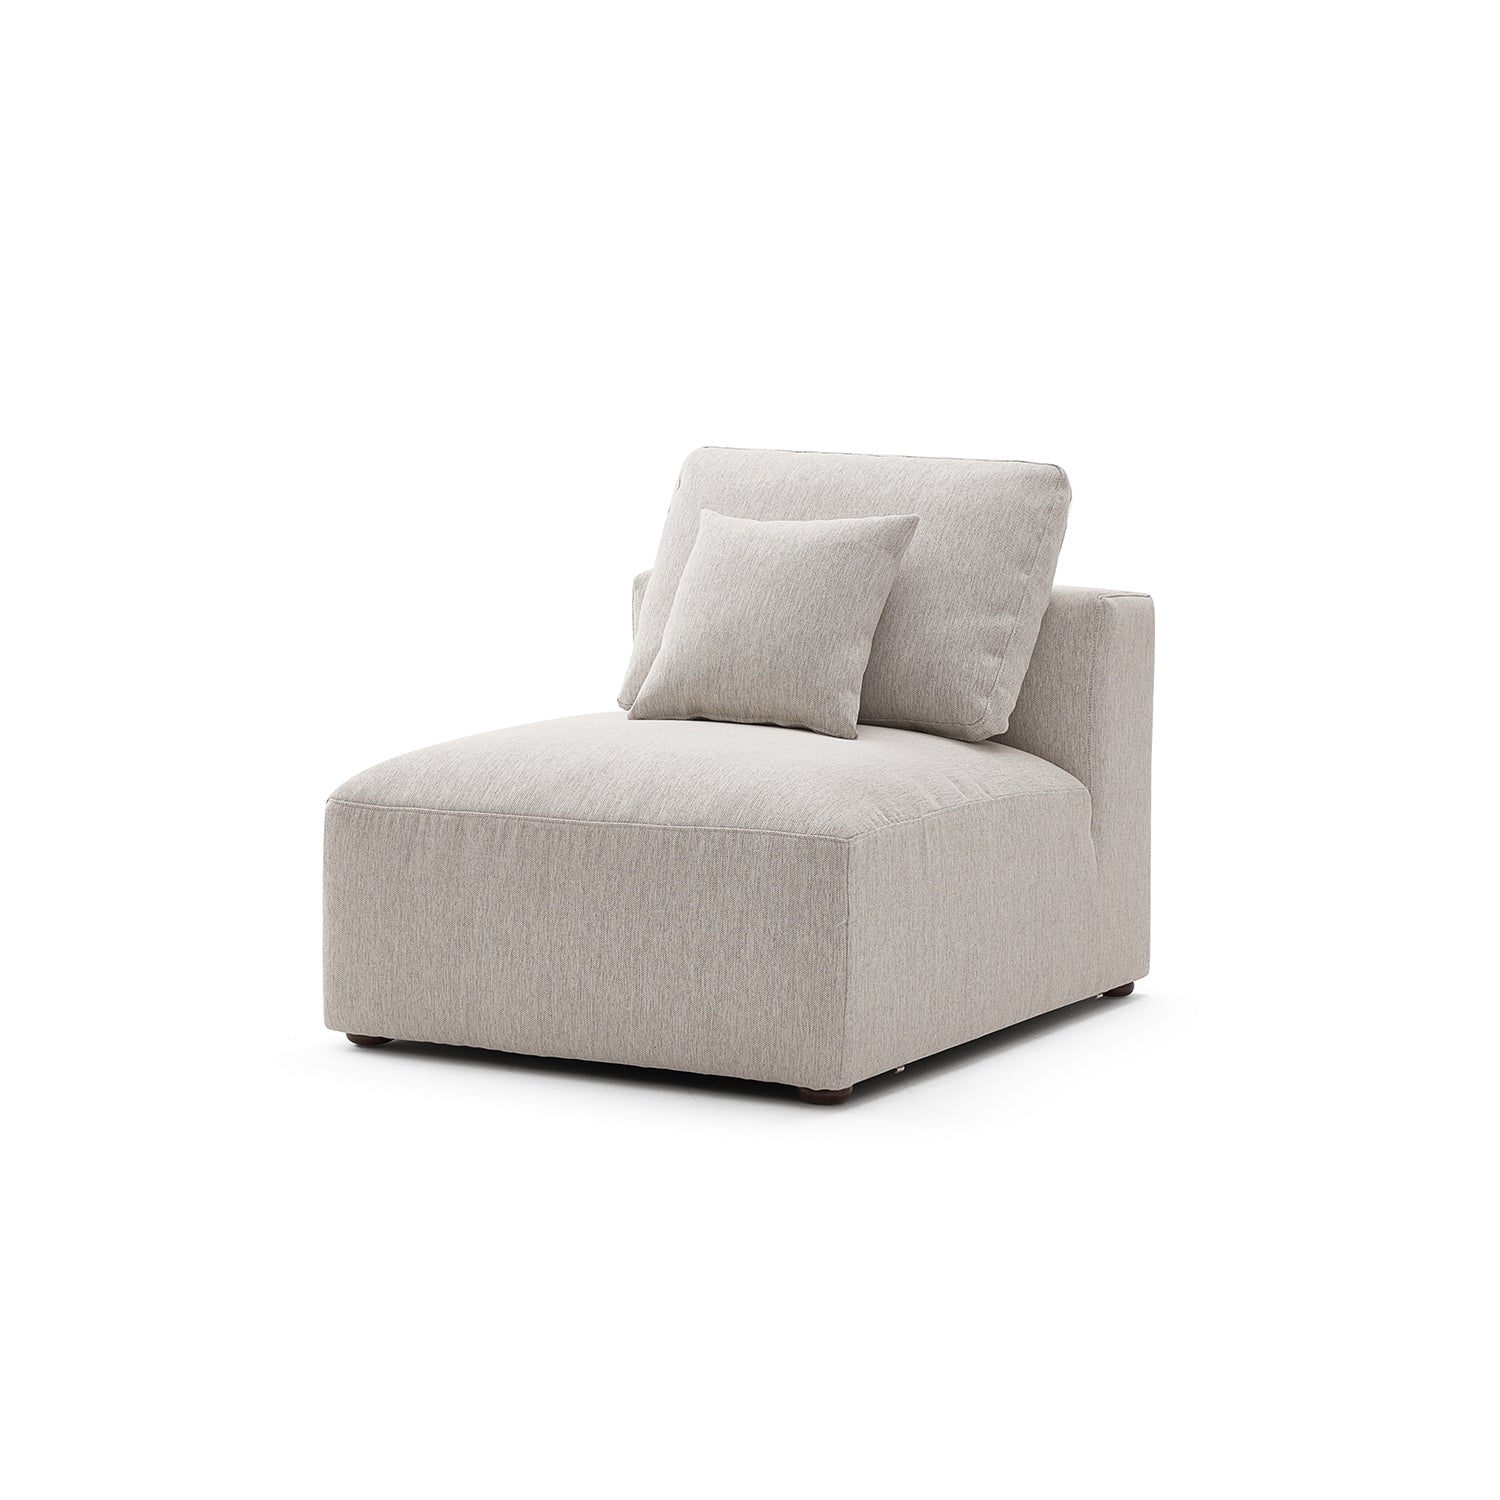 The 5th - Armless Seat, Modular Sofa, Foundry | Valyou Furniture 